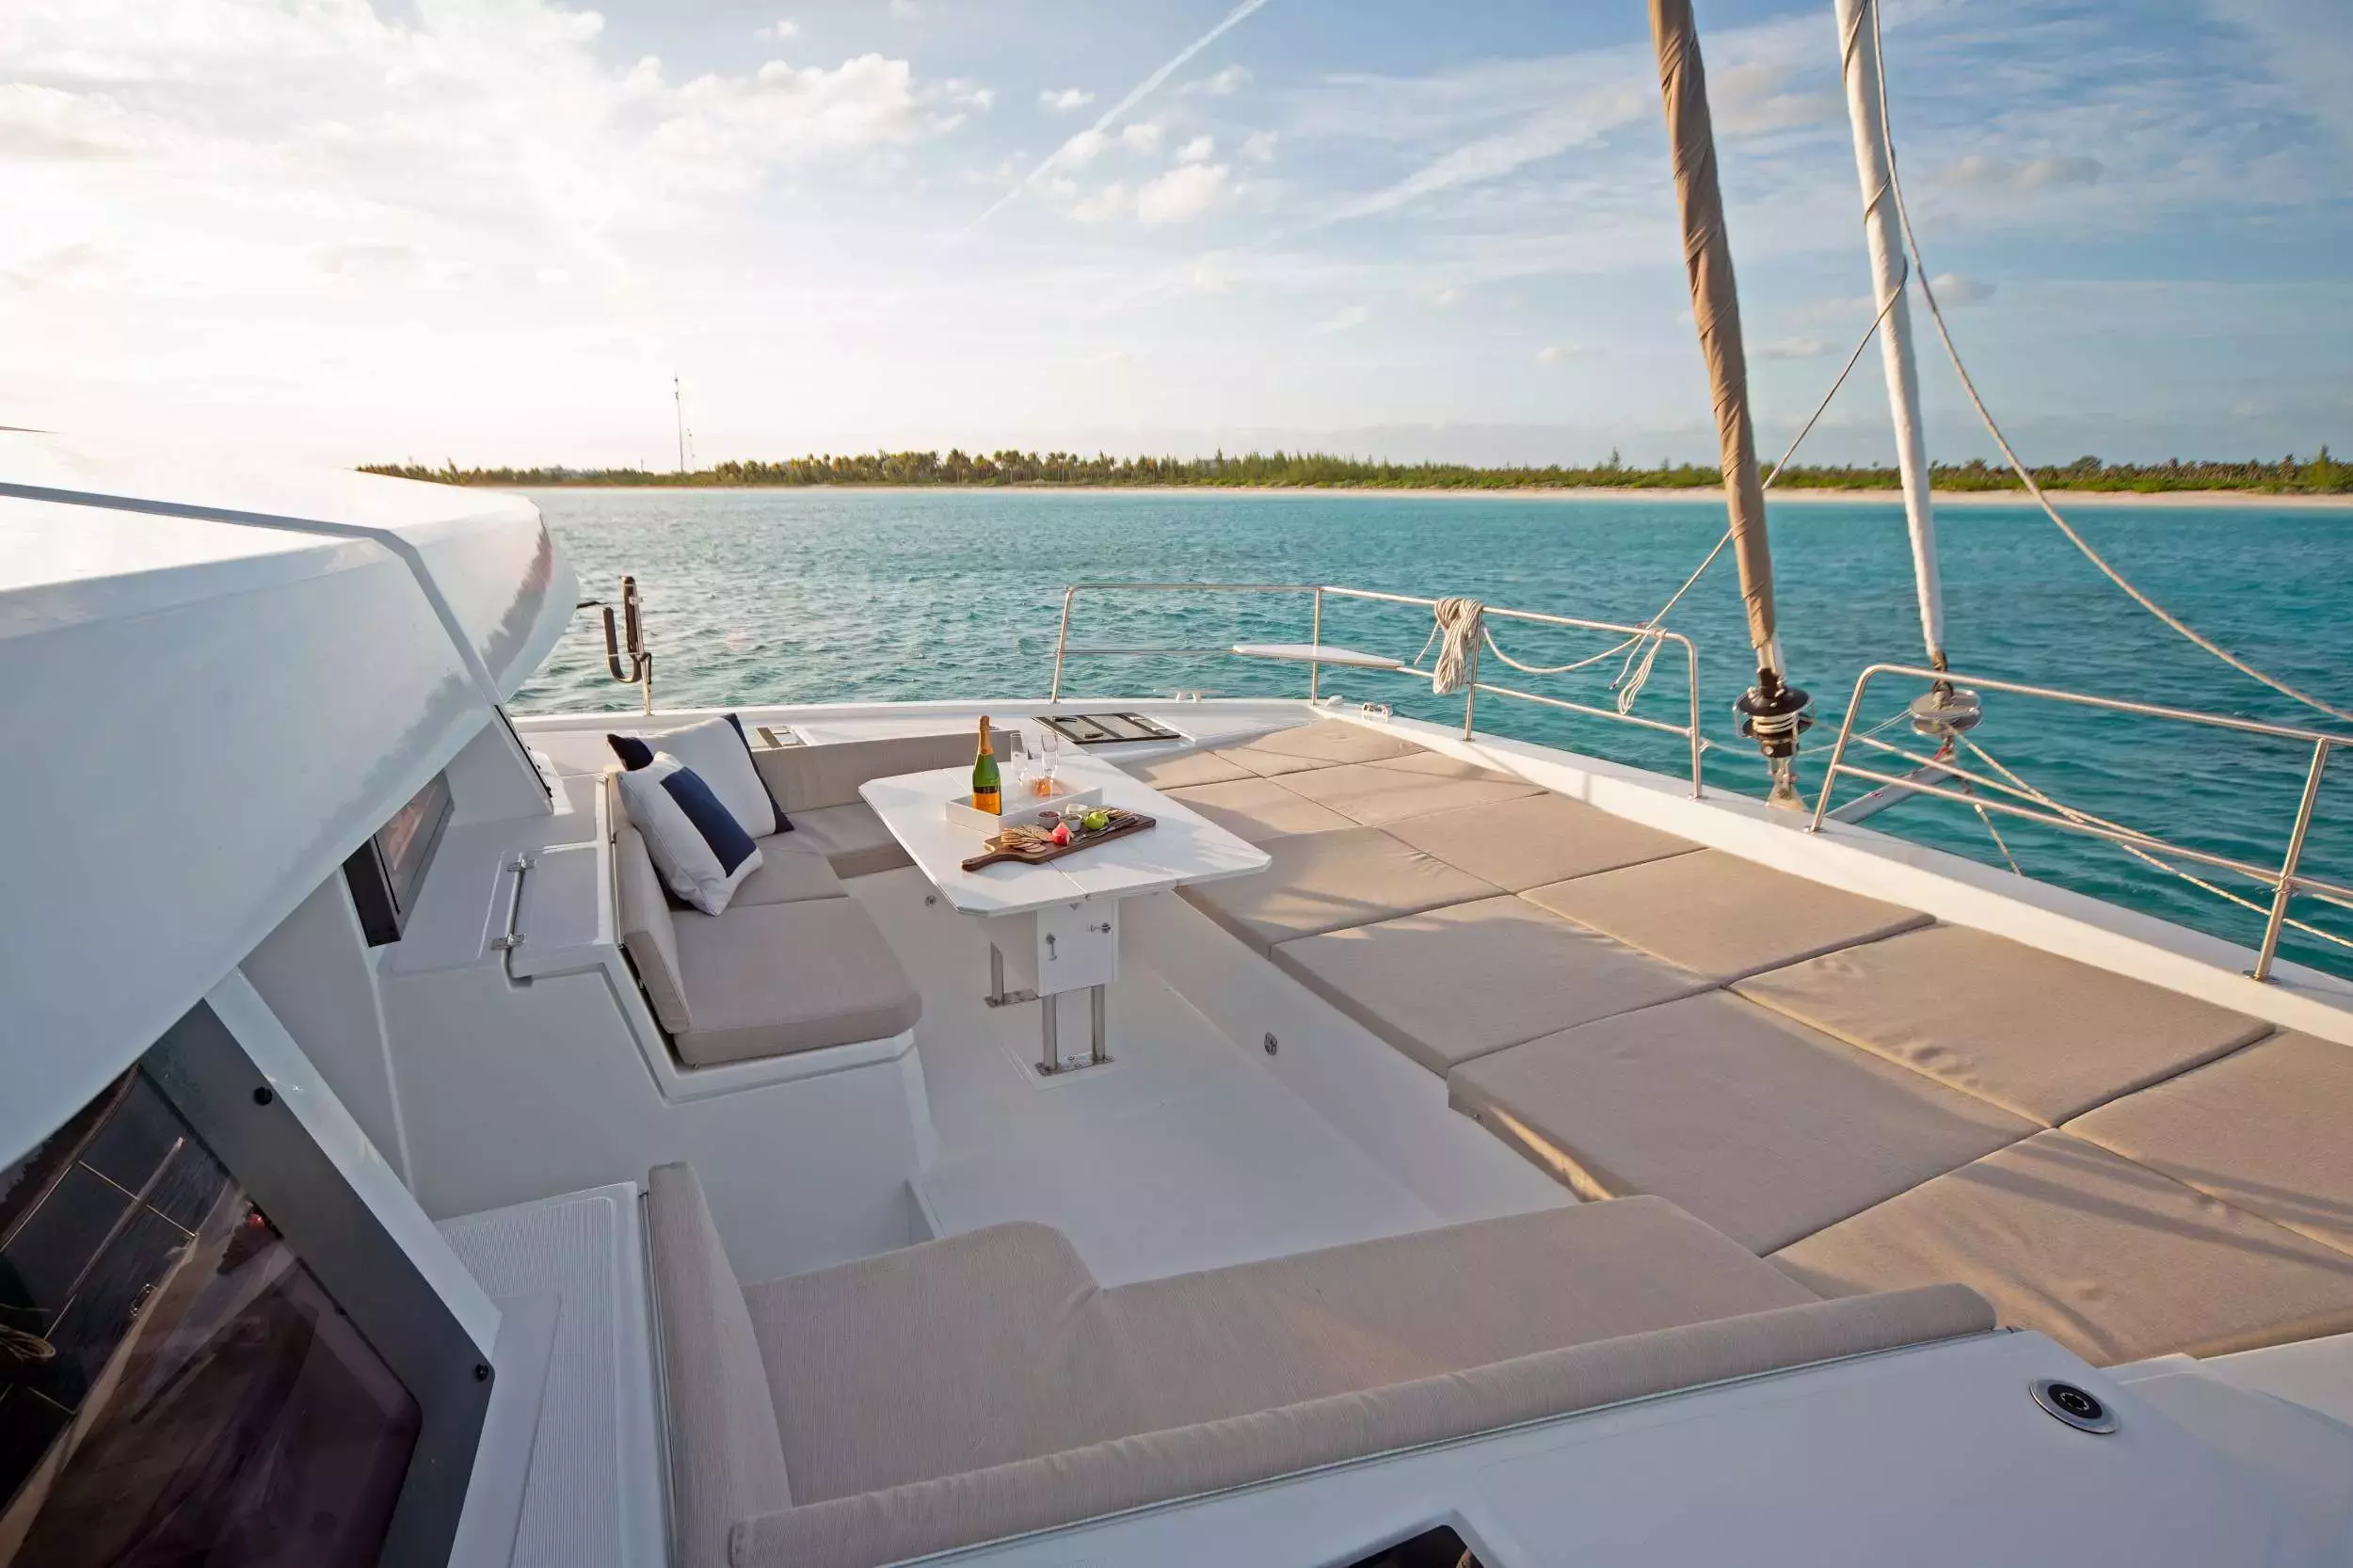 Interlude by Bali Catamarans - Top rates for a Rental of a private Sailing Catamaran in Bahamas